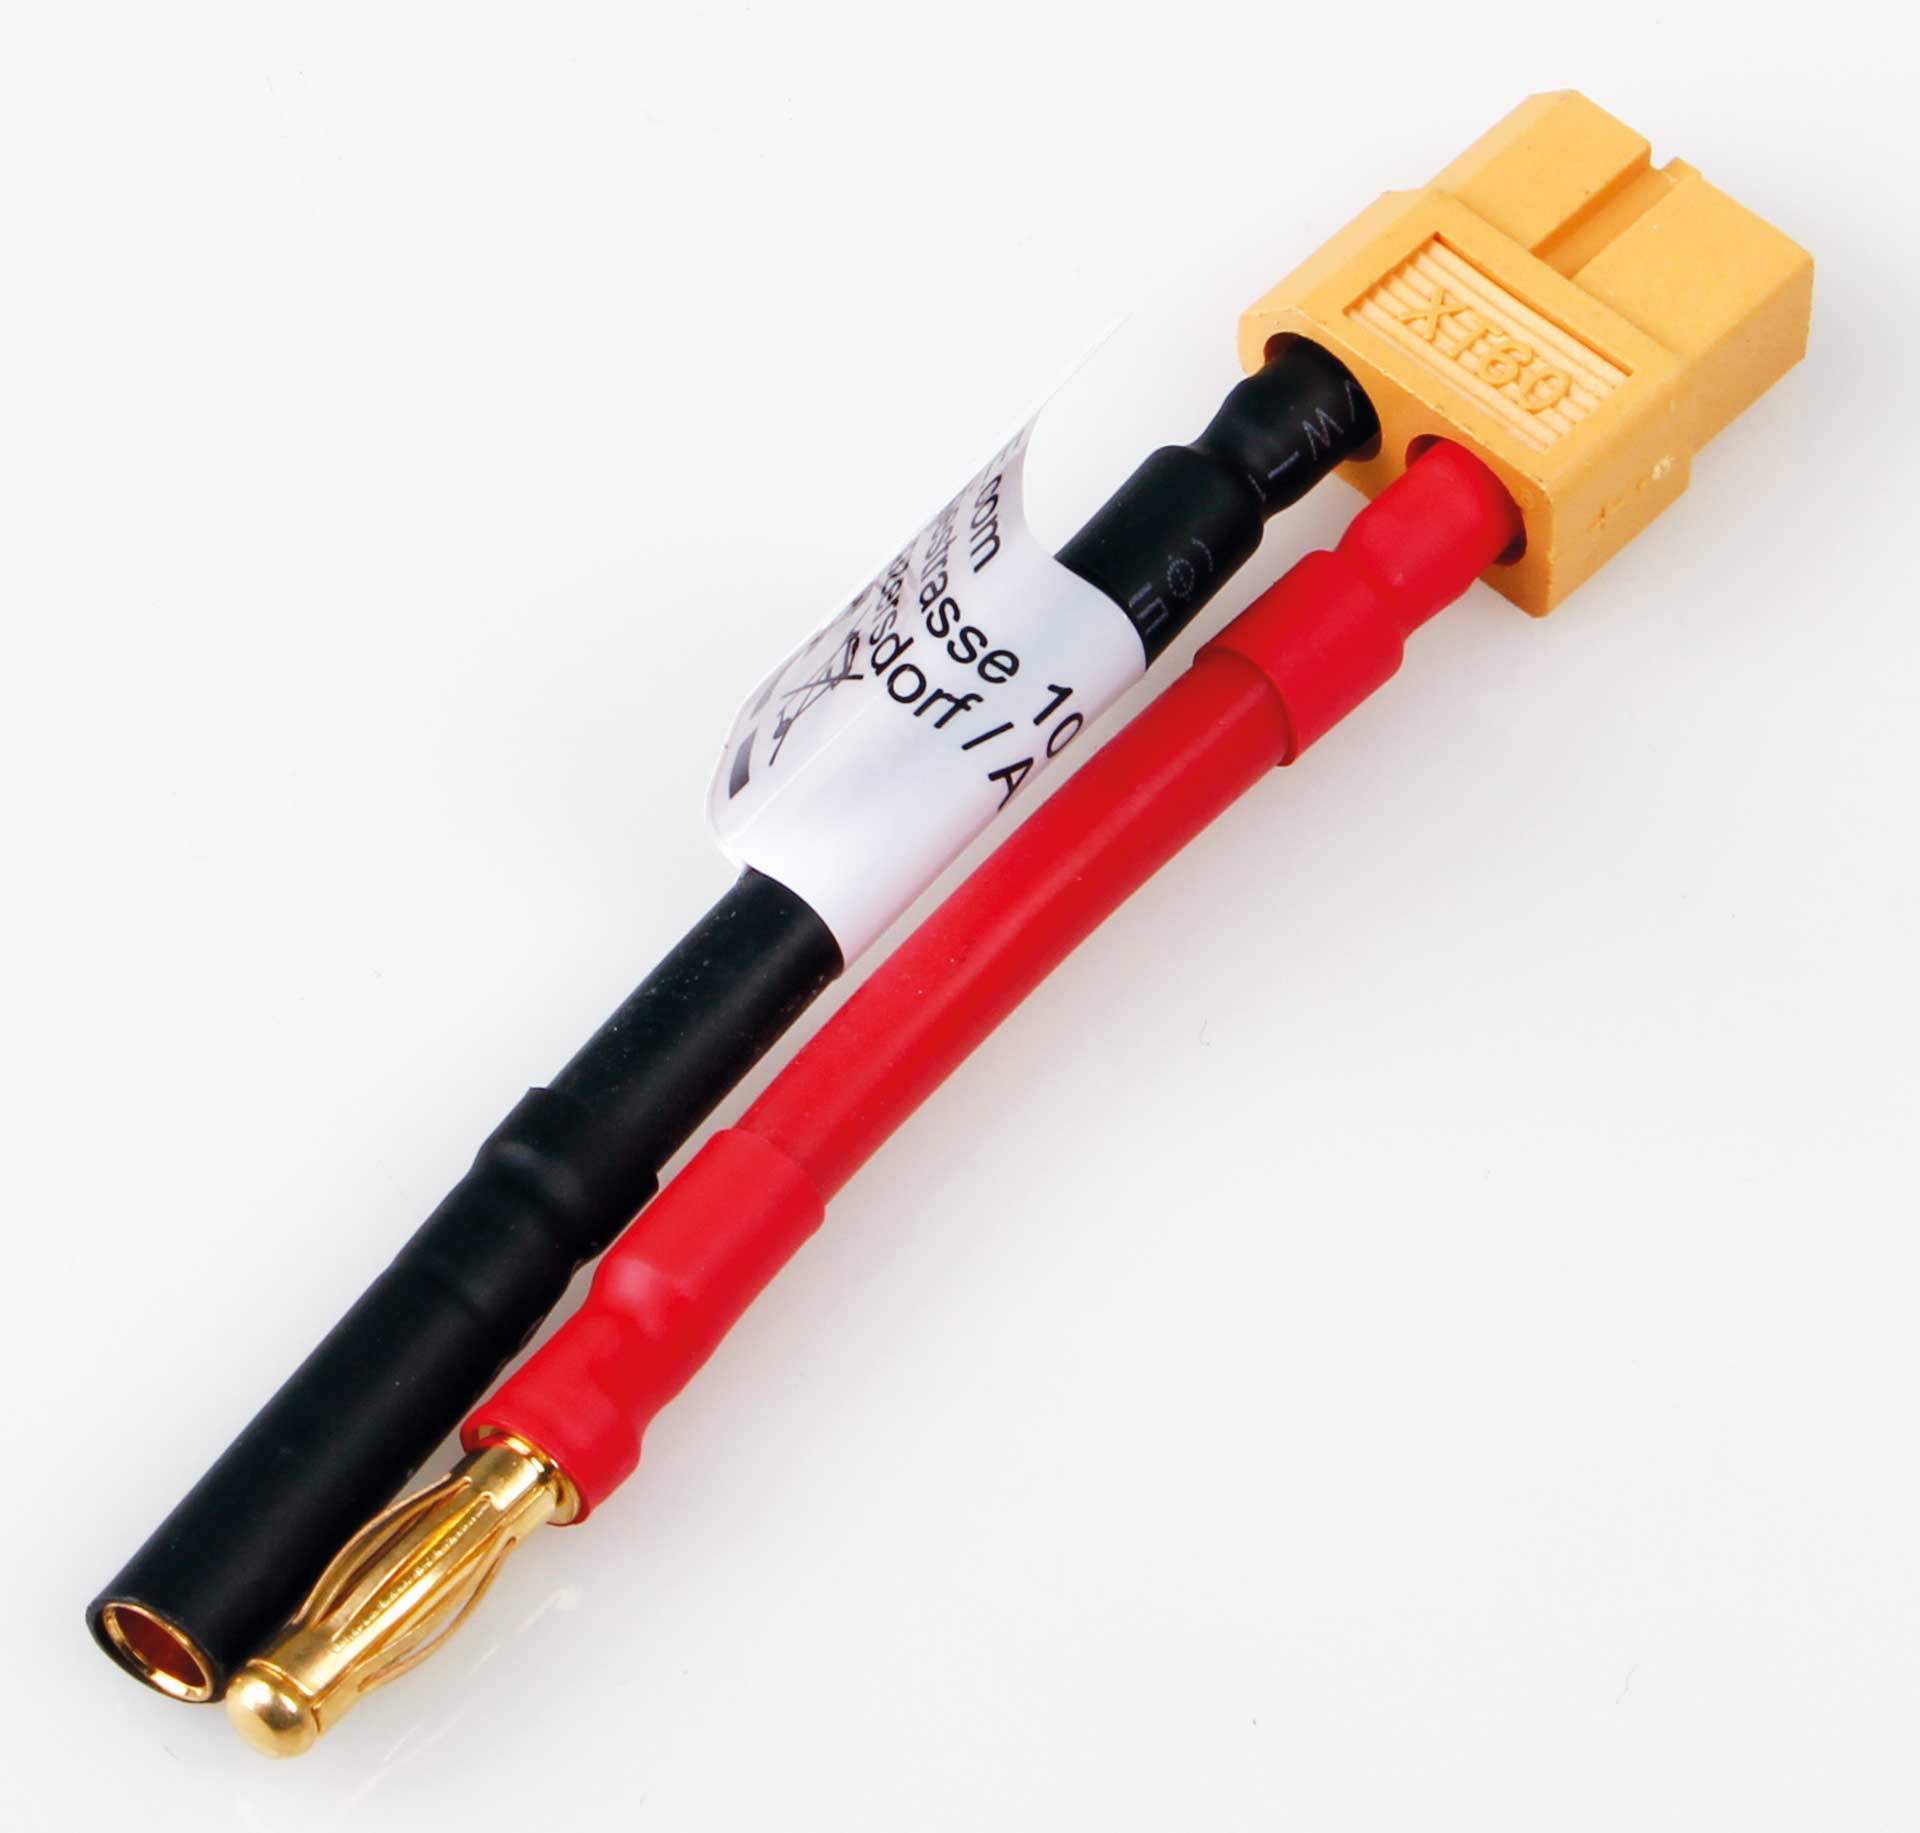 Robbe Modellsport Câble adaptateur  XT-60 Femelle  sur  4mm Goldkontakt Stecksystem (Femelle  = schwarz) 30mm Longueur de câble  12AWG 1Pièce